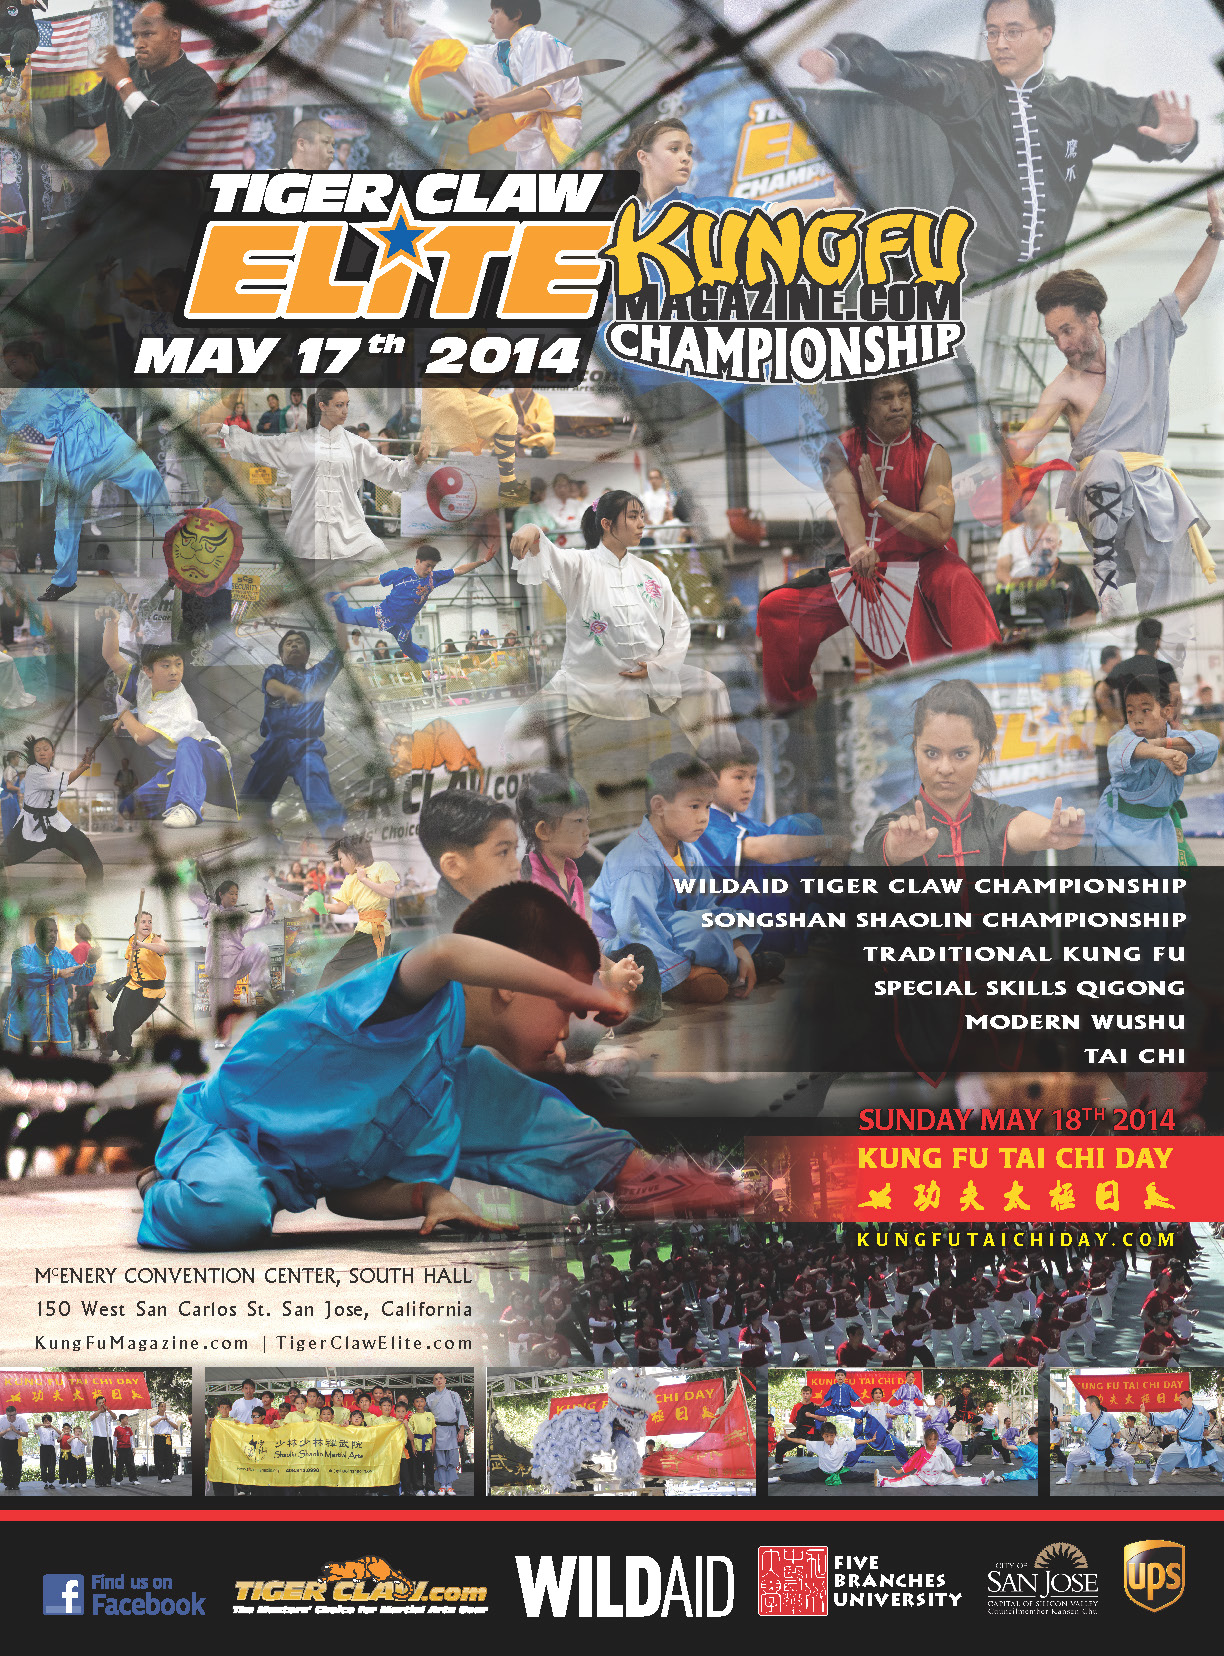 Tiger Claw Elite KungFuMagazine.com Championship 2014